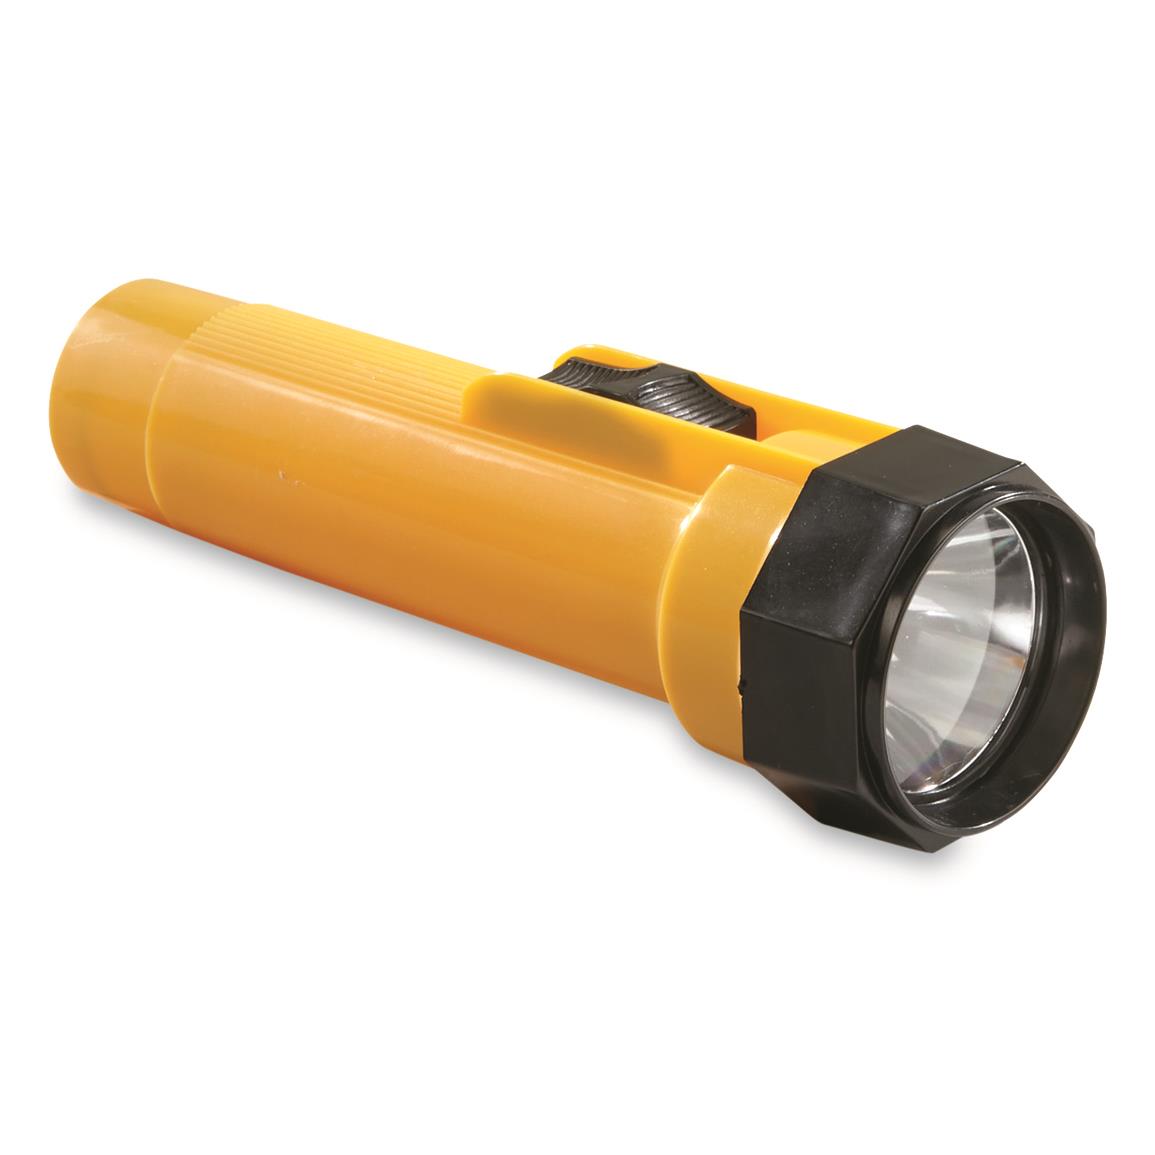 U.S. Municipal Surplus LED Flashlight, 2 Pack, New